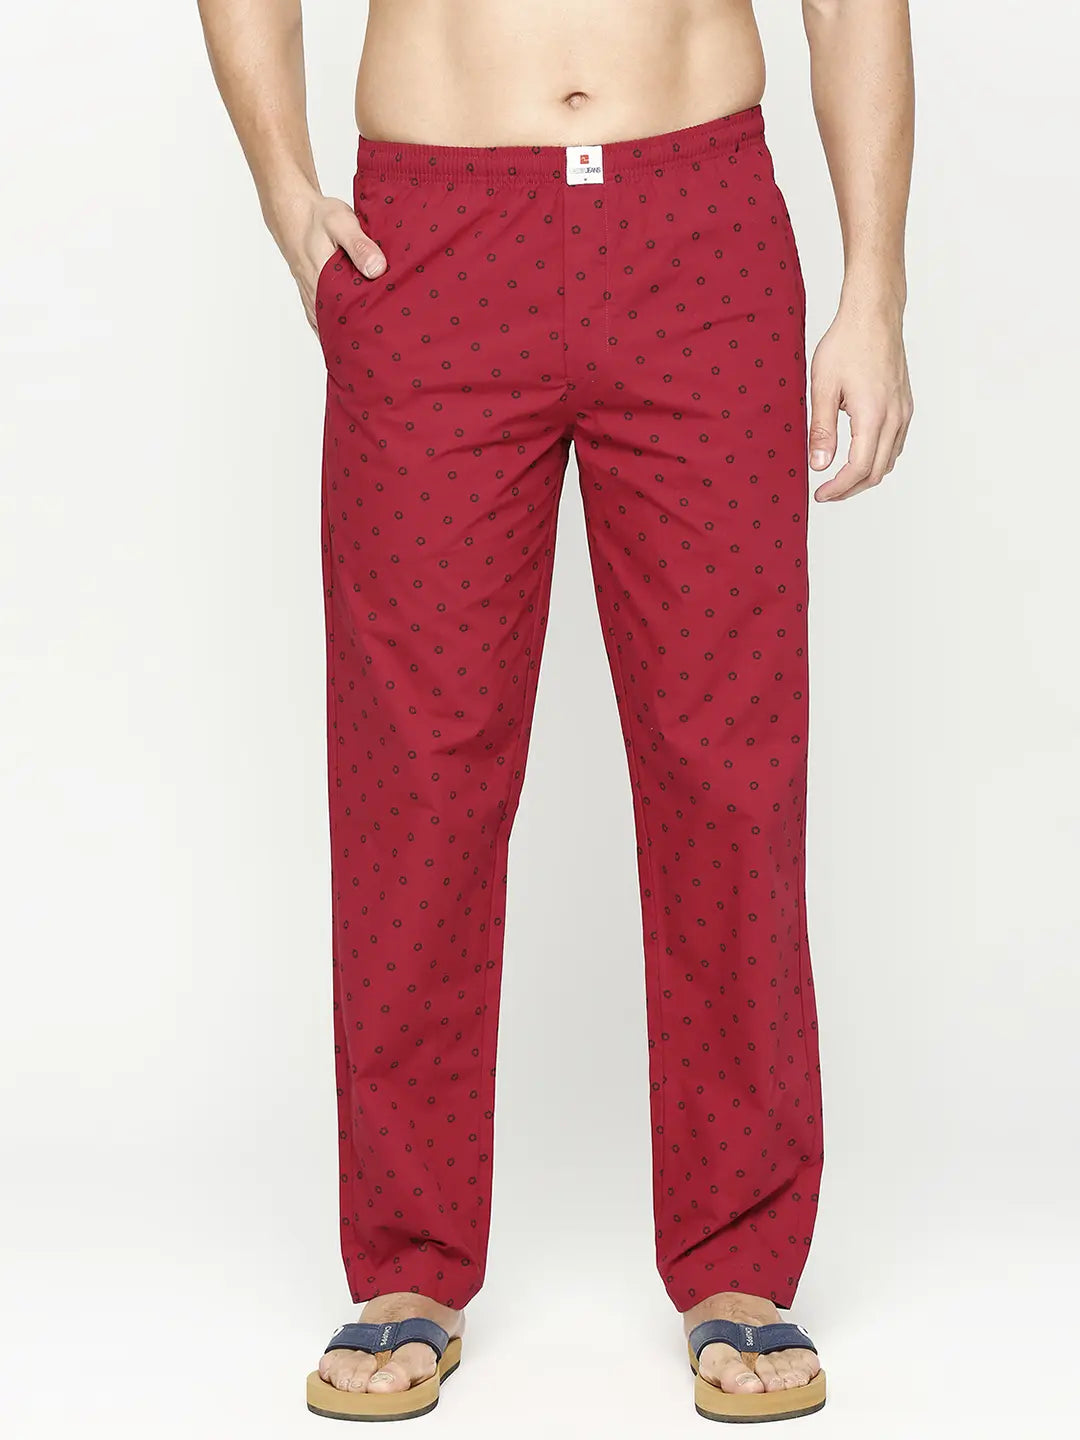 Men Premium Cotton Printed Maroon Pyjama- Underjeans by Spykar